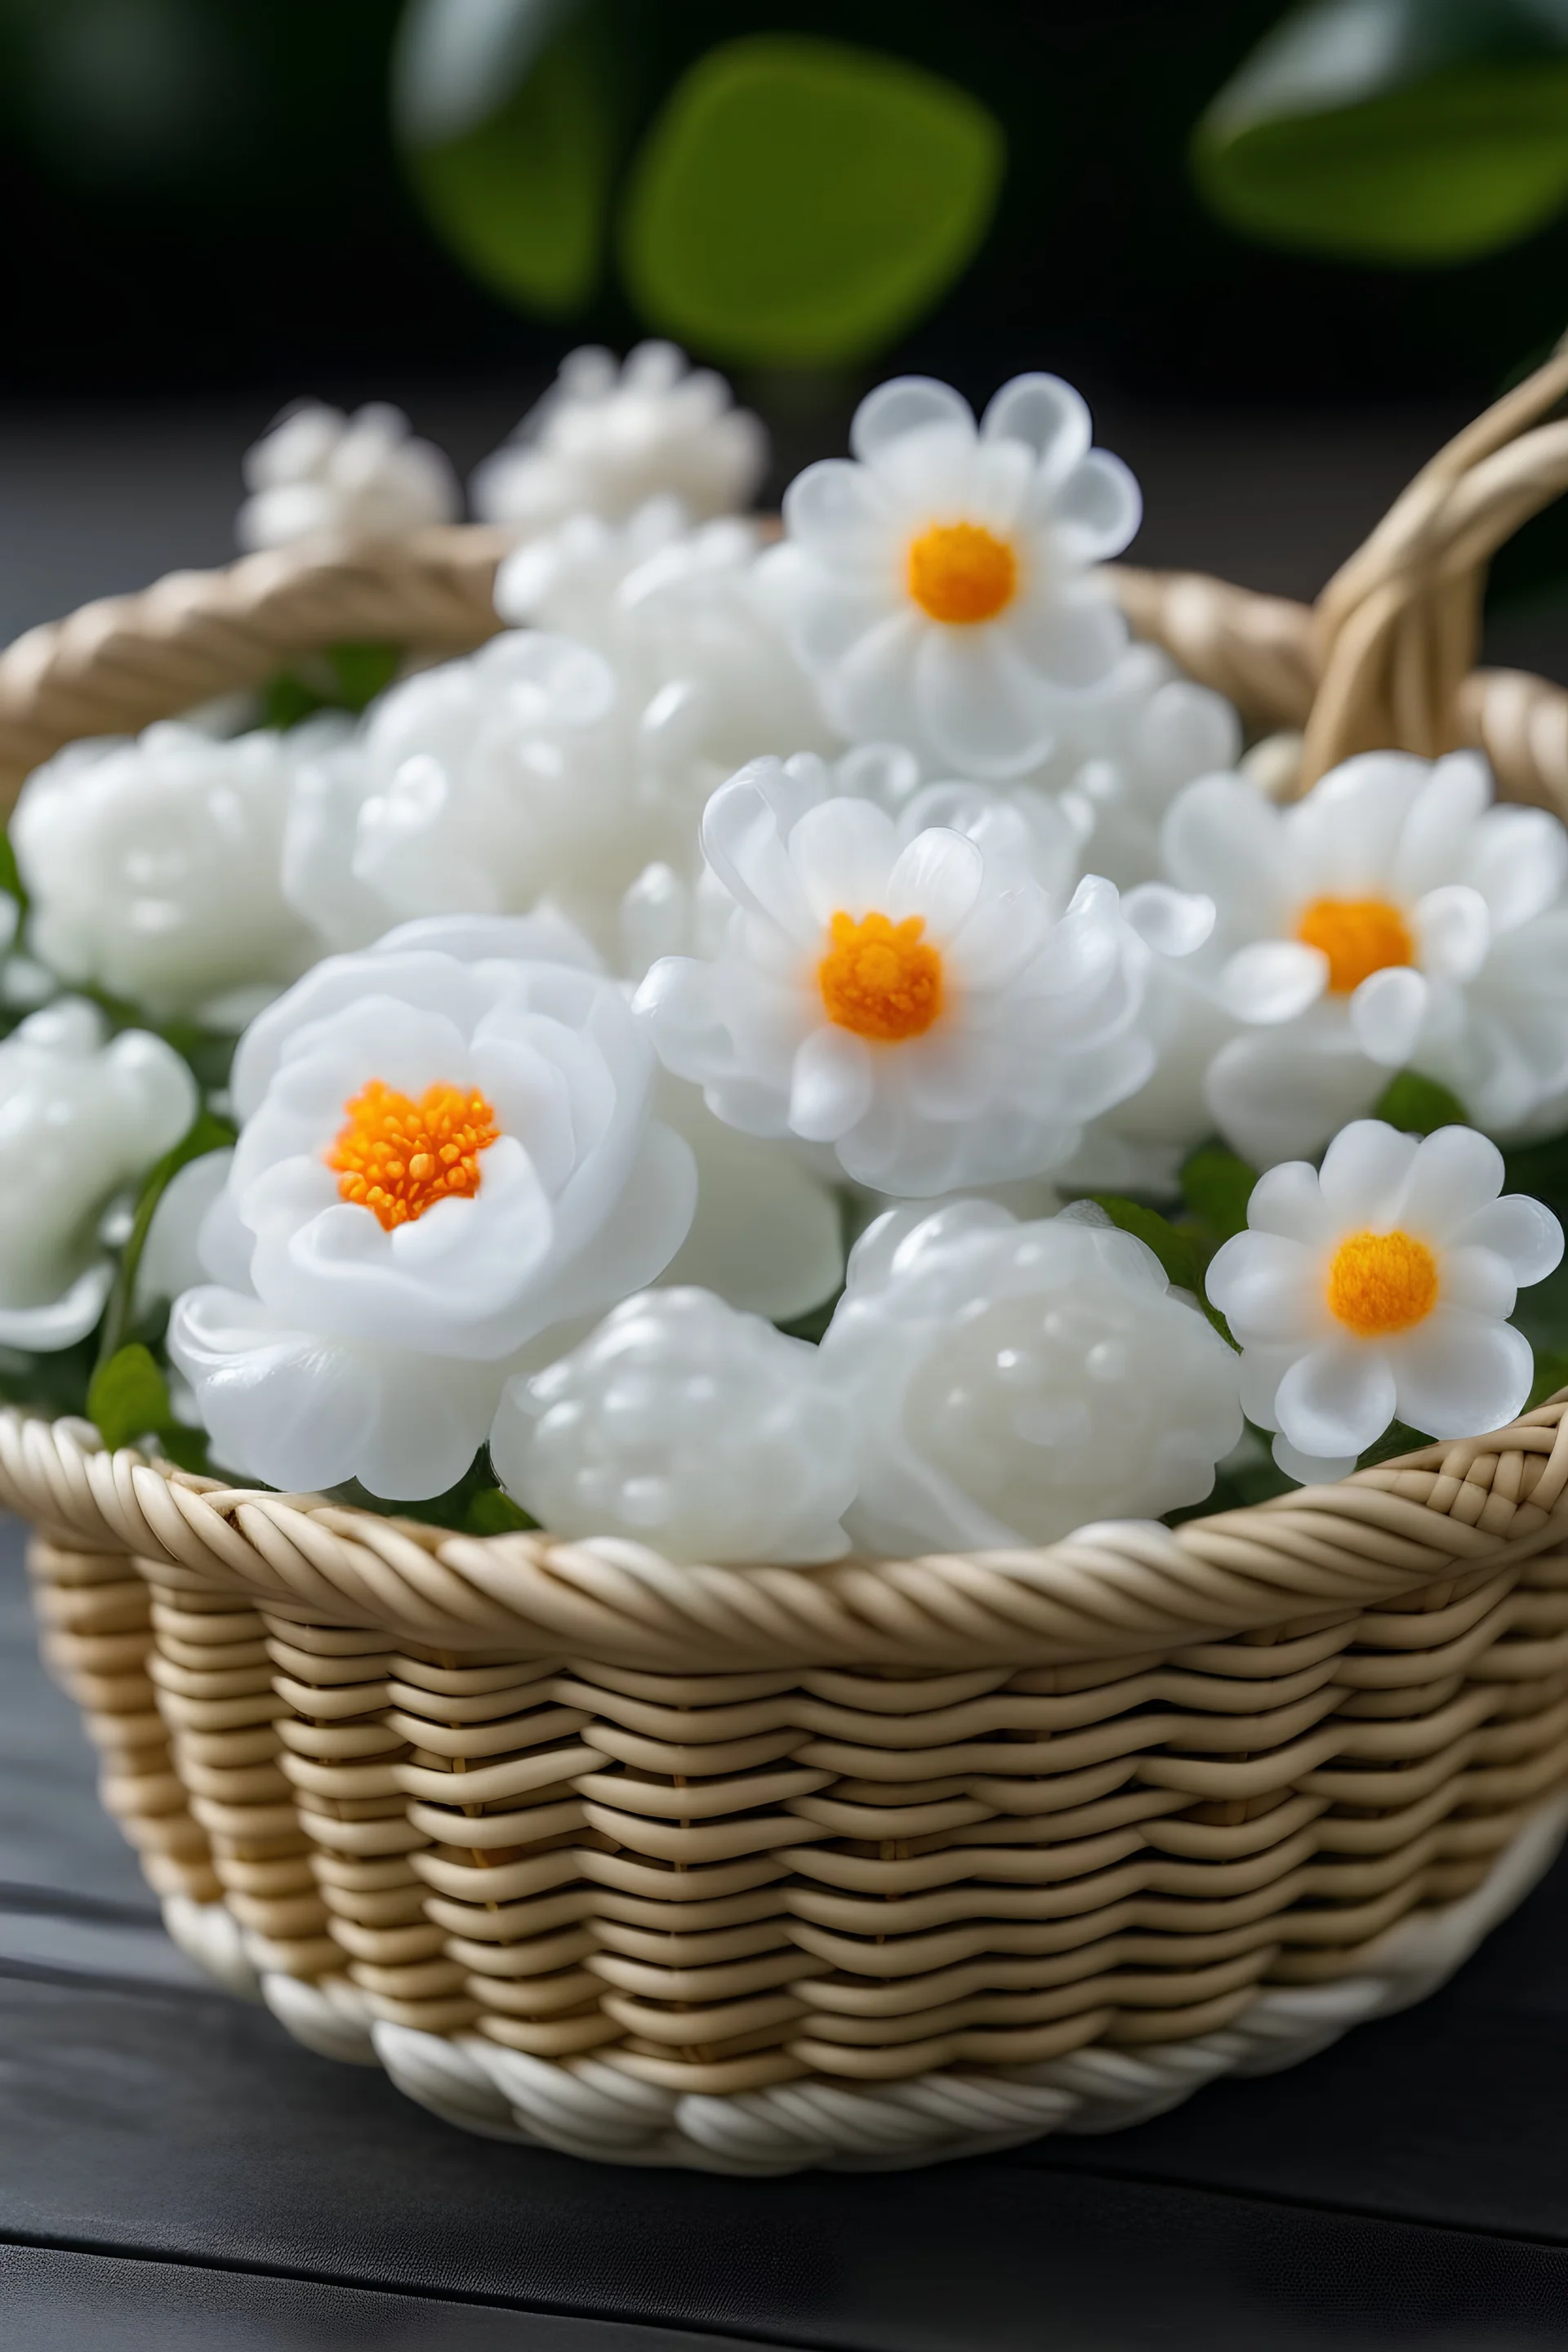 kumpulan bunga melati putih di atas keranjang